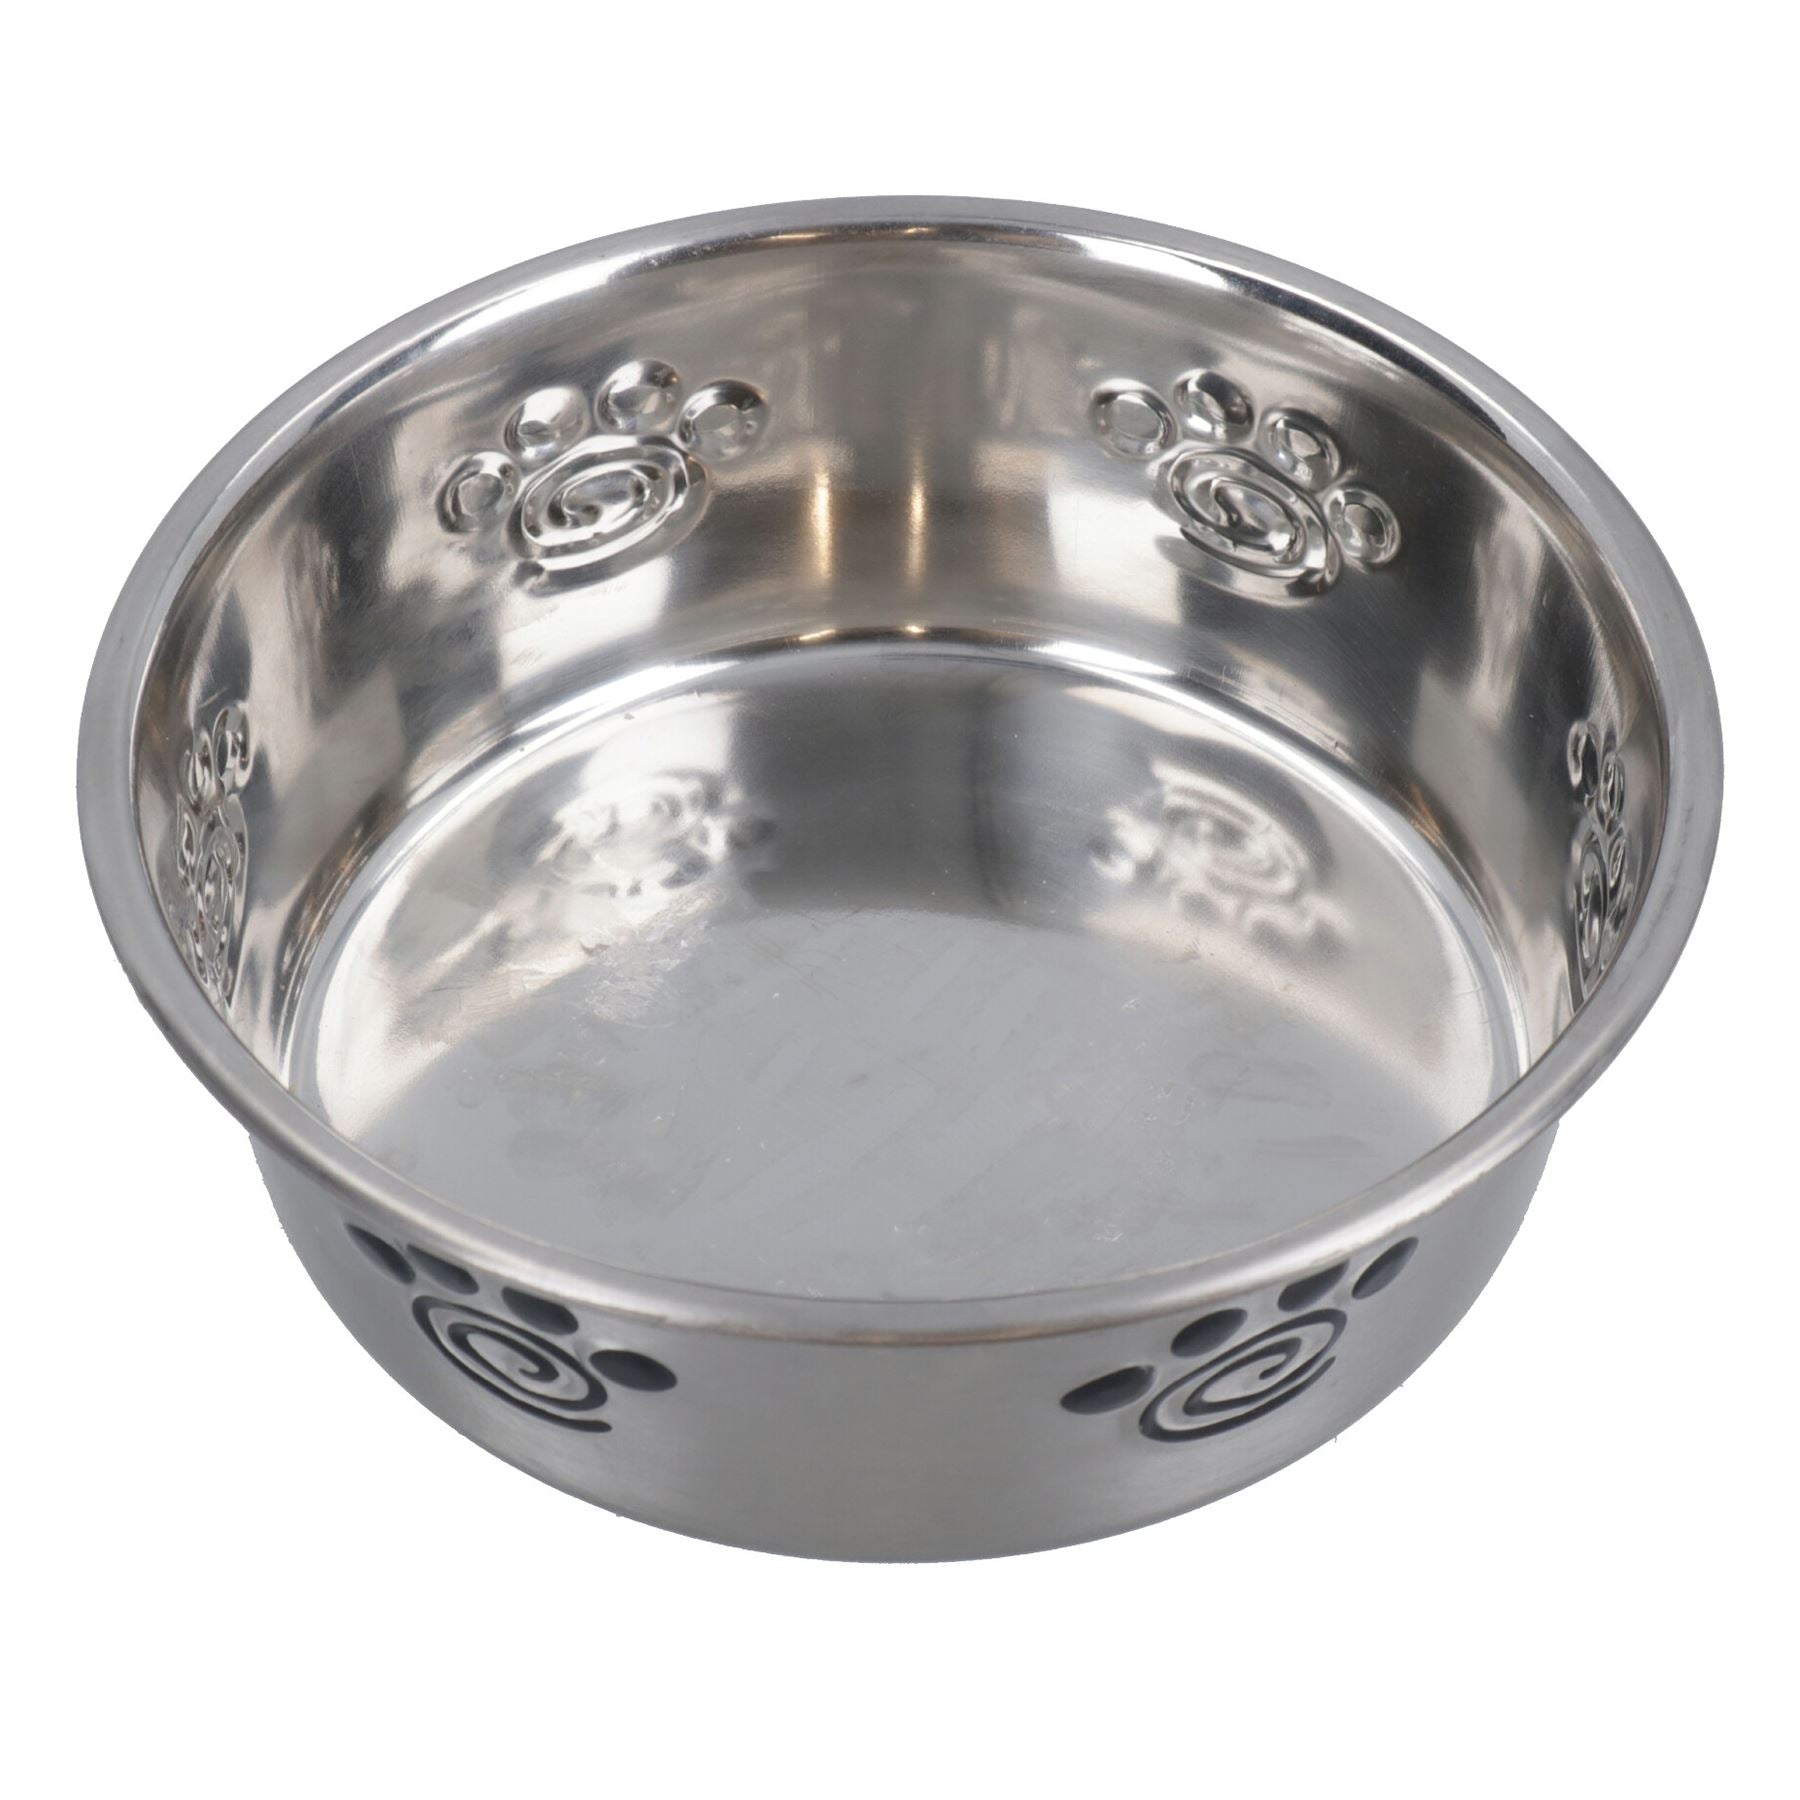 1 Heavy Duty Non Slip Silver Paw Bowl Dog Puppy Feed Food Water Bowl 16cm